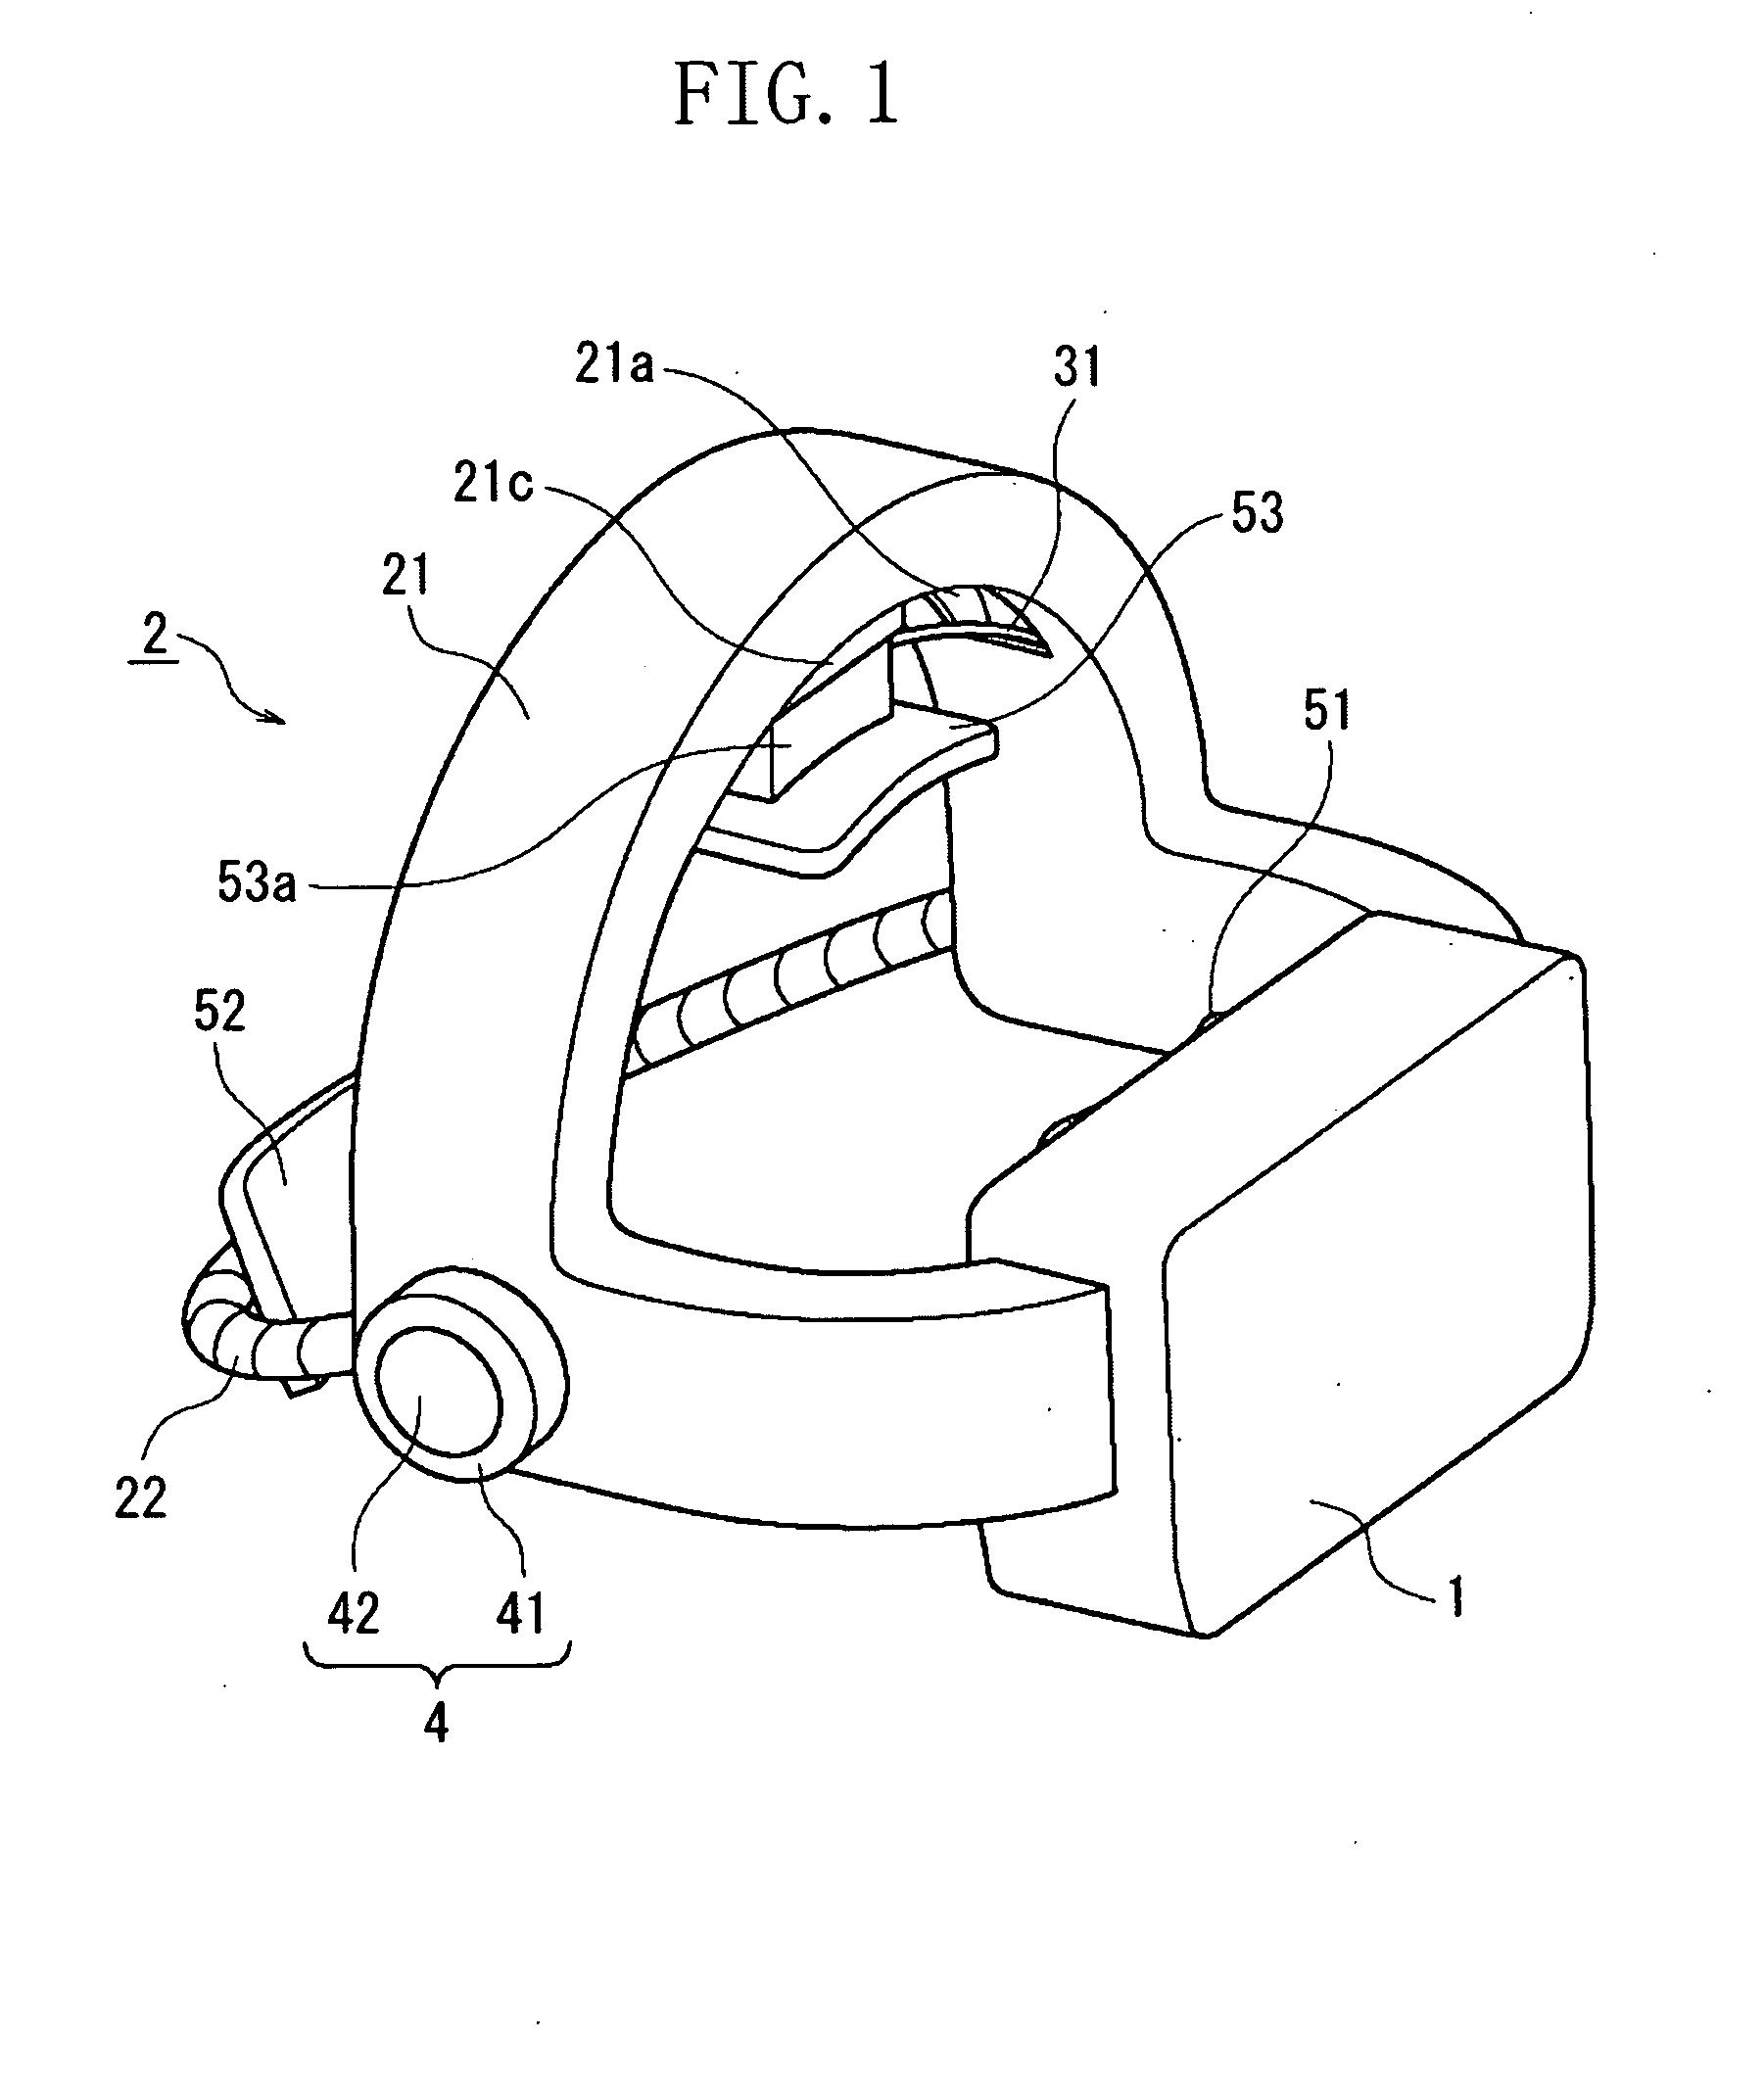 Head-mounted device